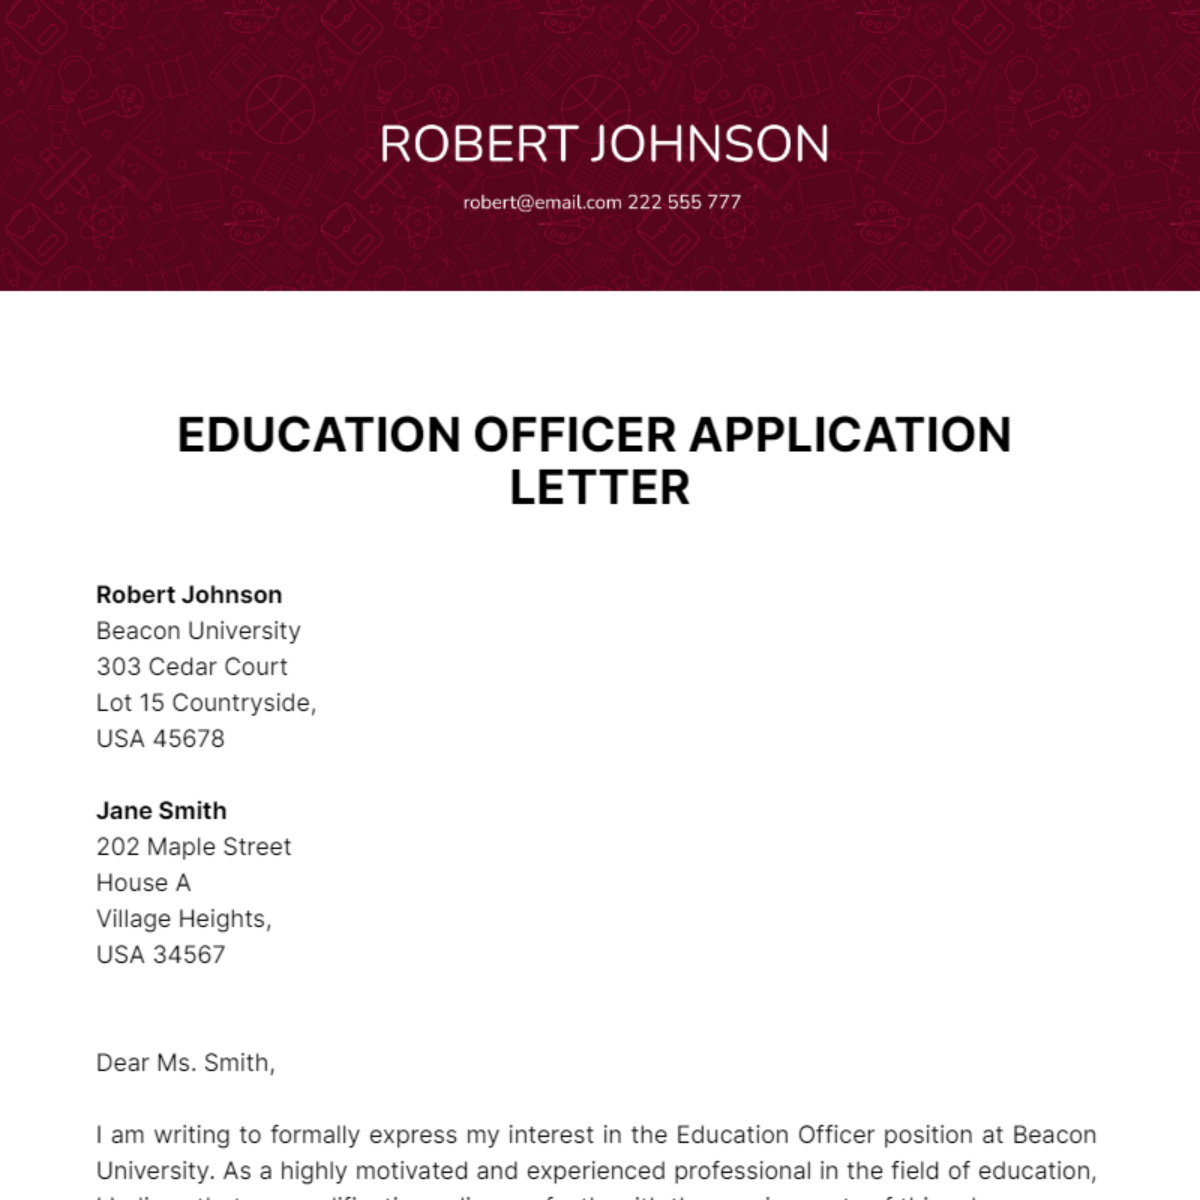 Education Officer Application Letter Template